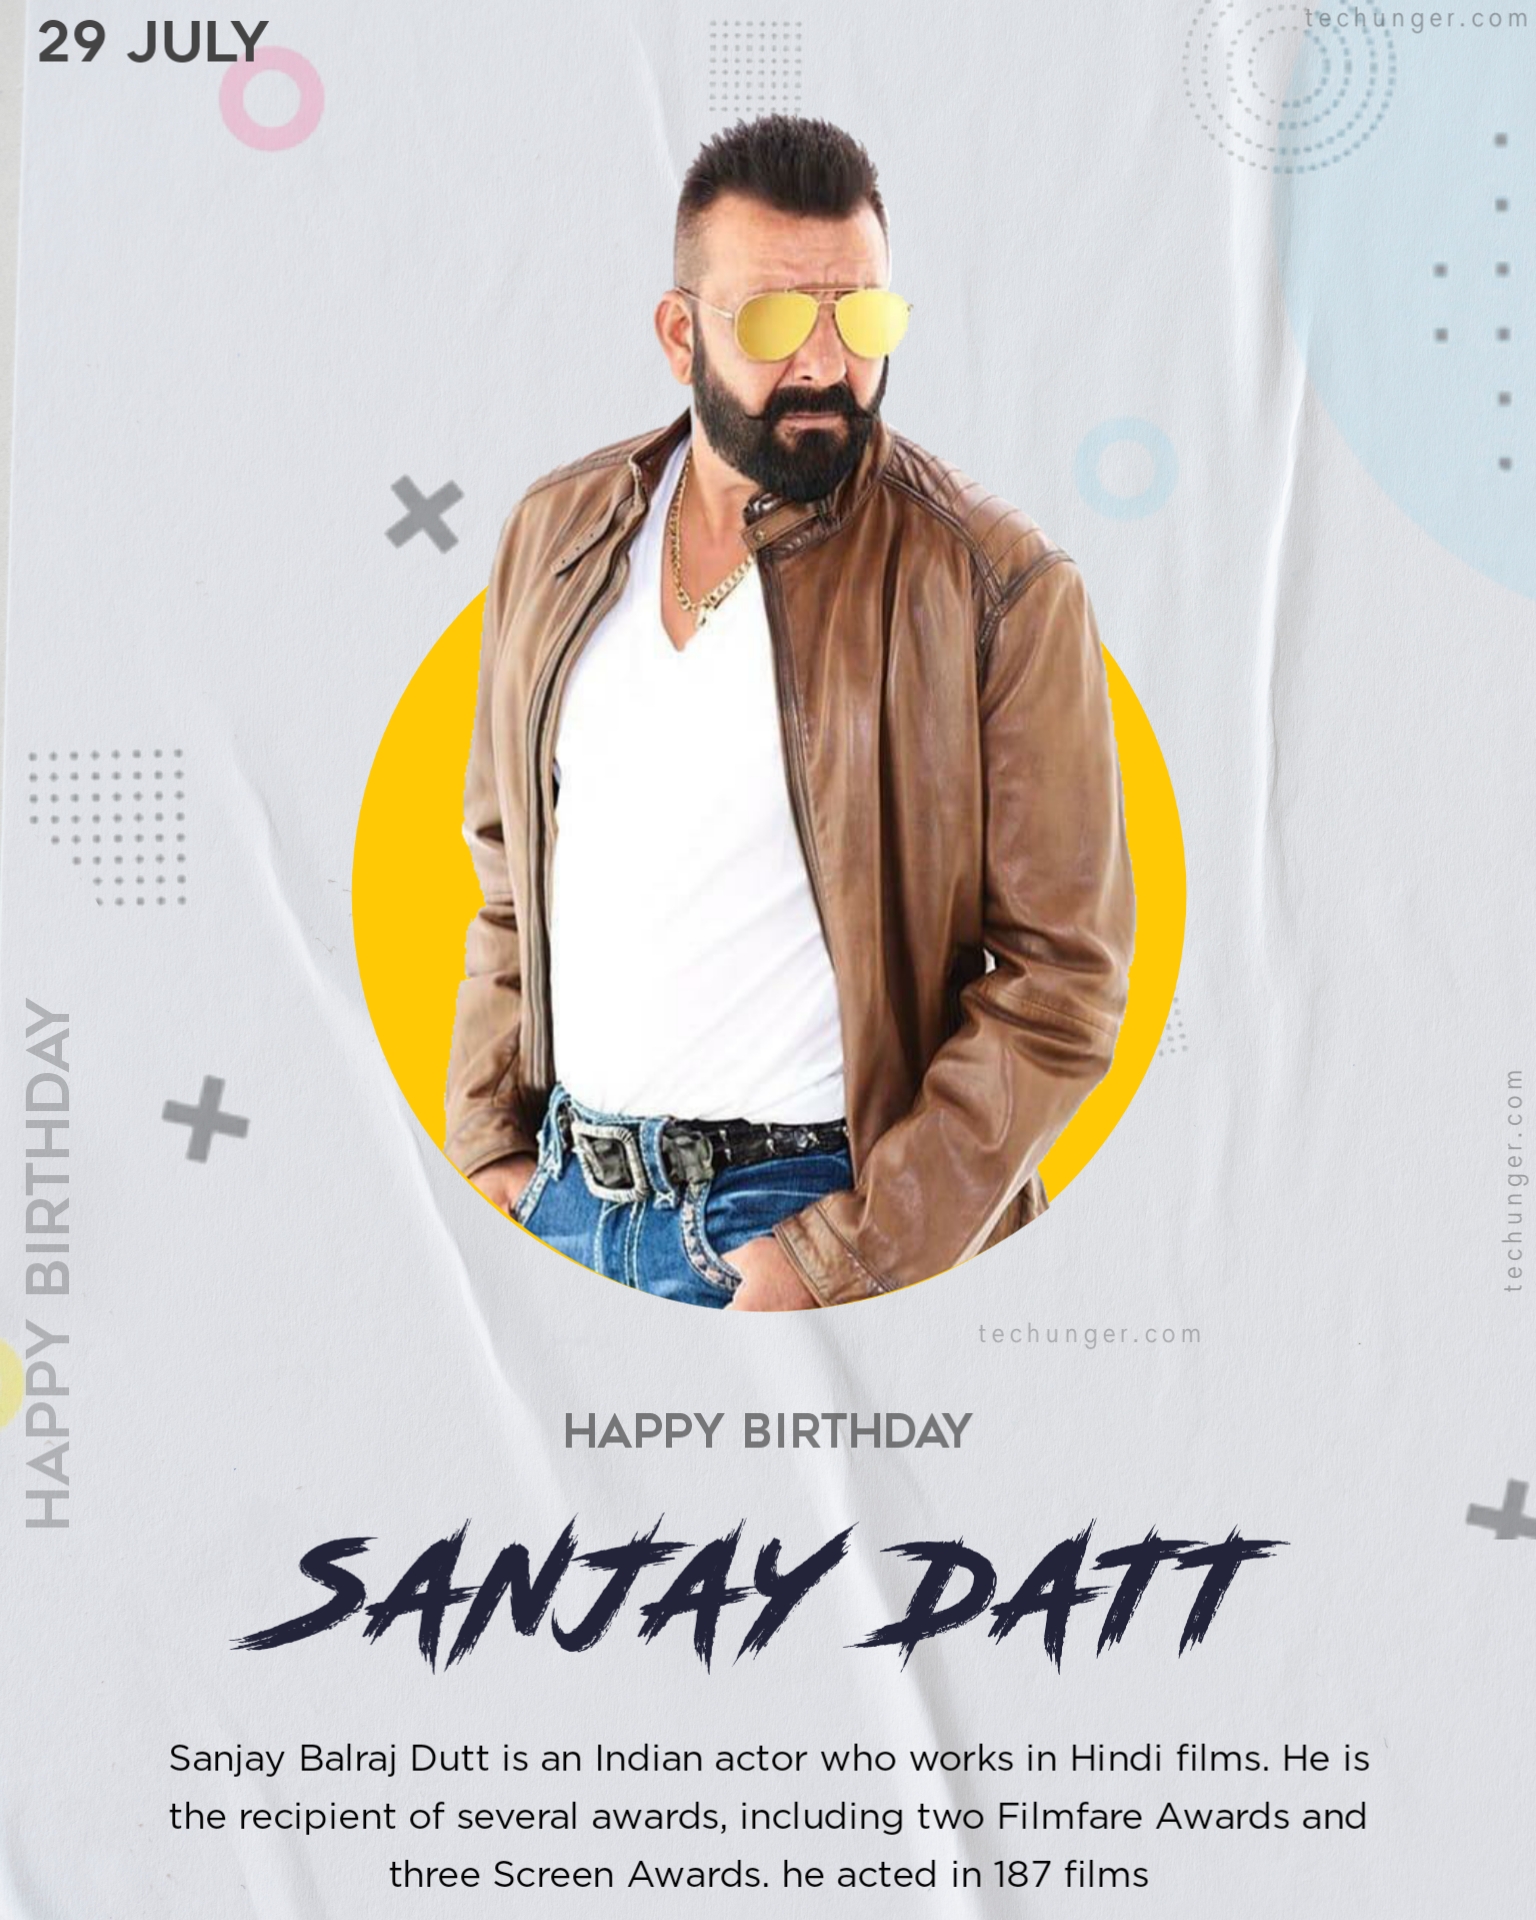 sanjay datt birthday, techunger, संजय दत्त 